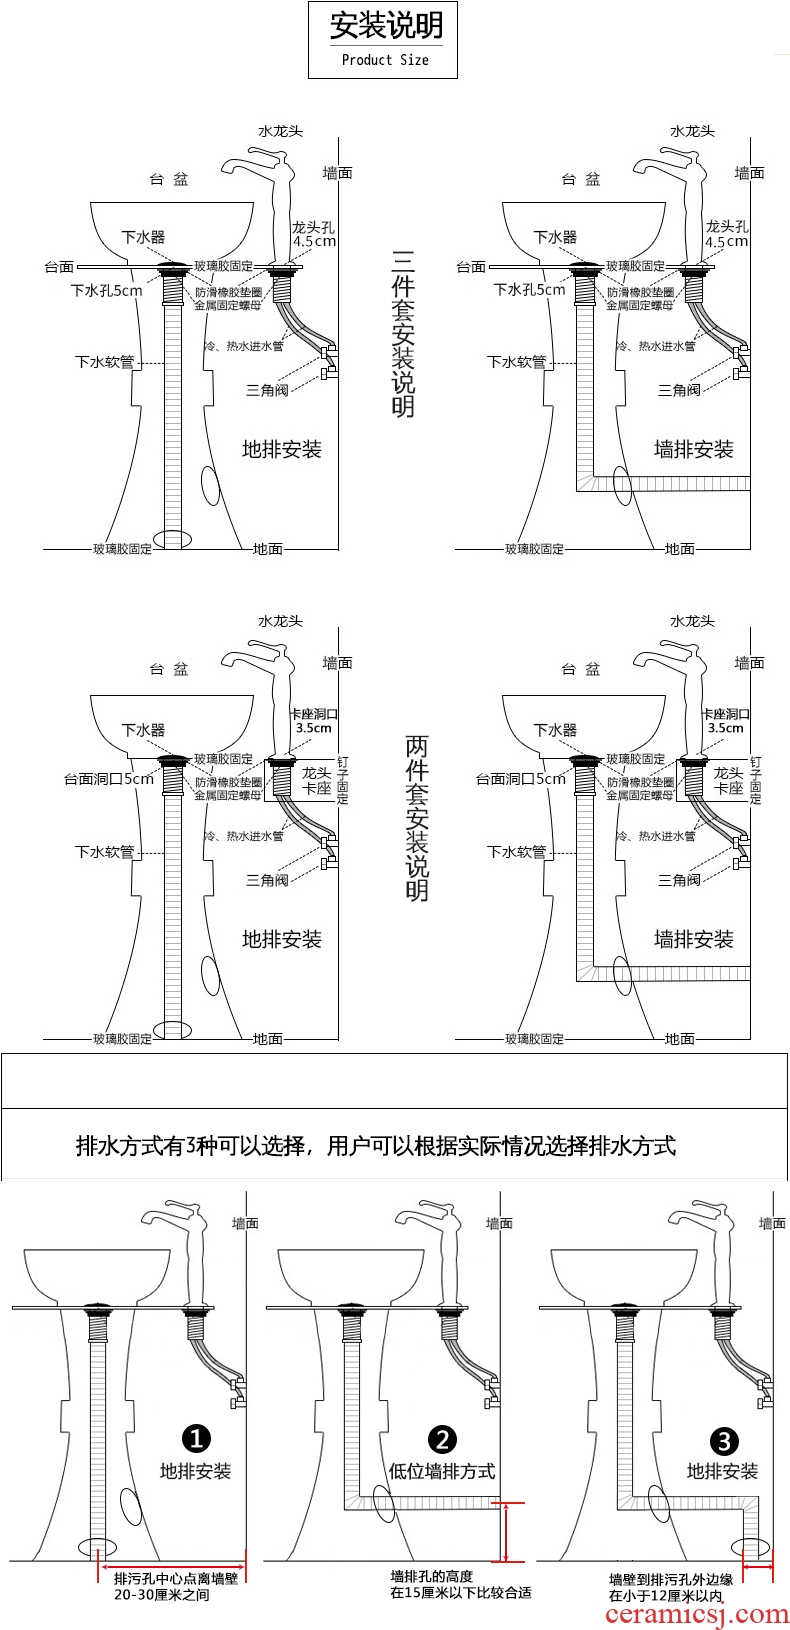 JingWei column basin sink balcony lavatory basin one toilet stage basin sink art ceramic column